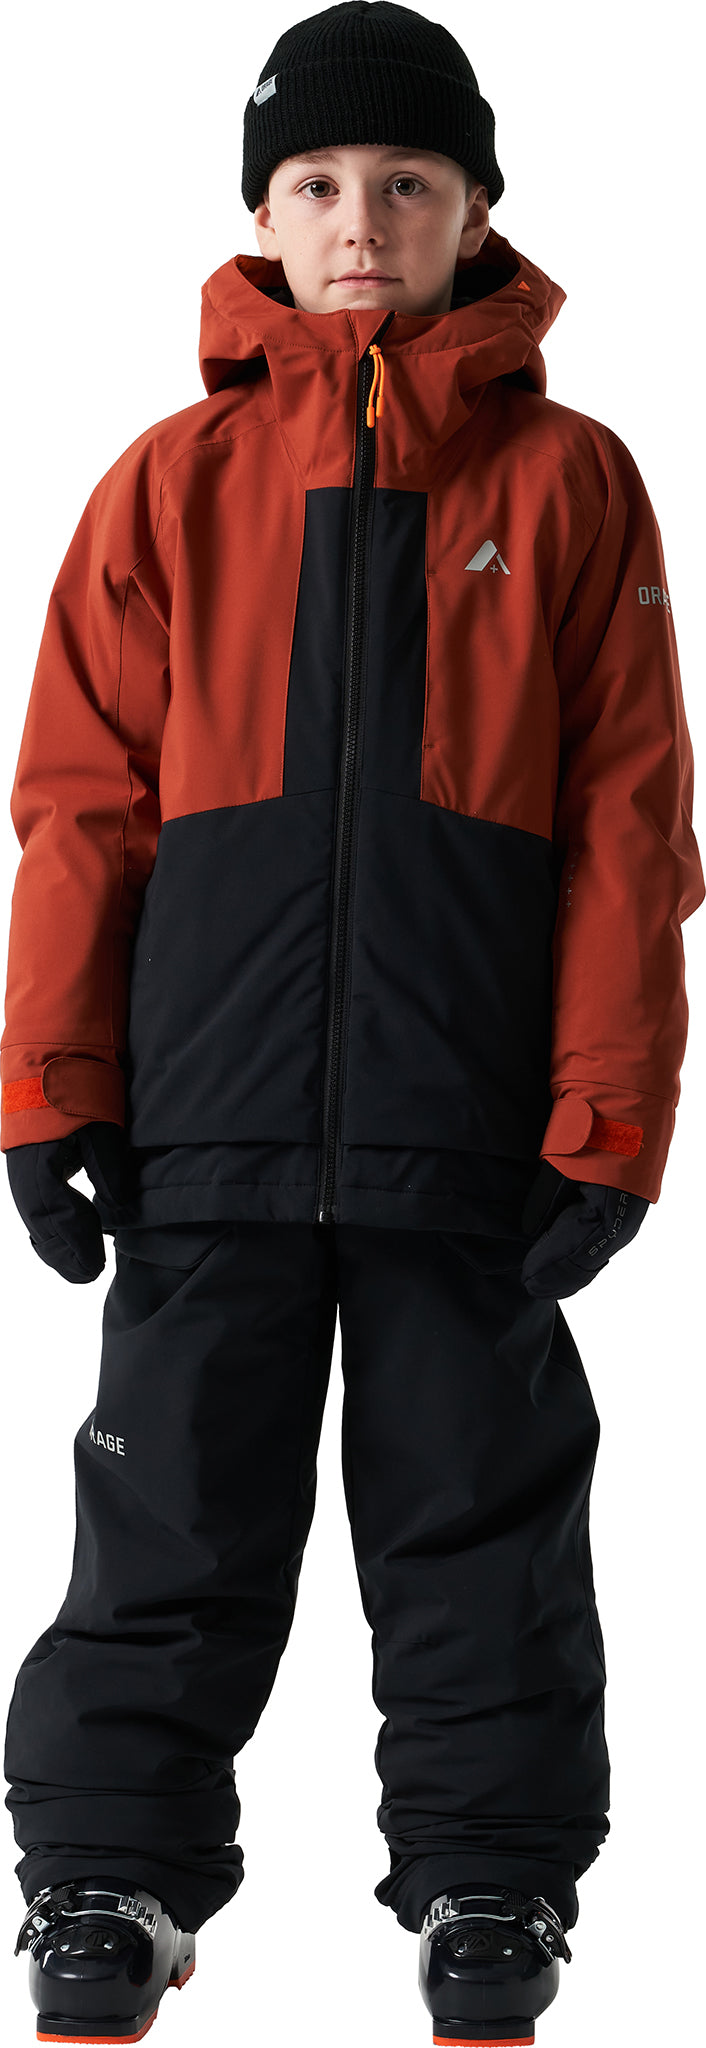 Orage Jackets, Pants & Apparel | Altitude Sports